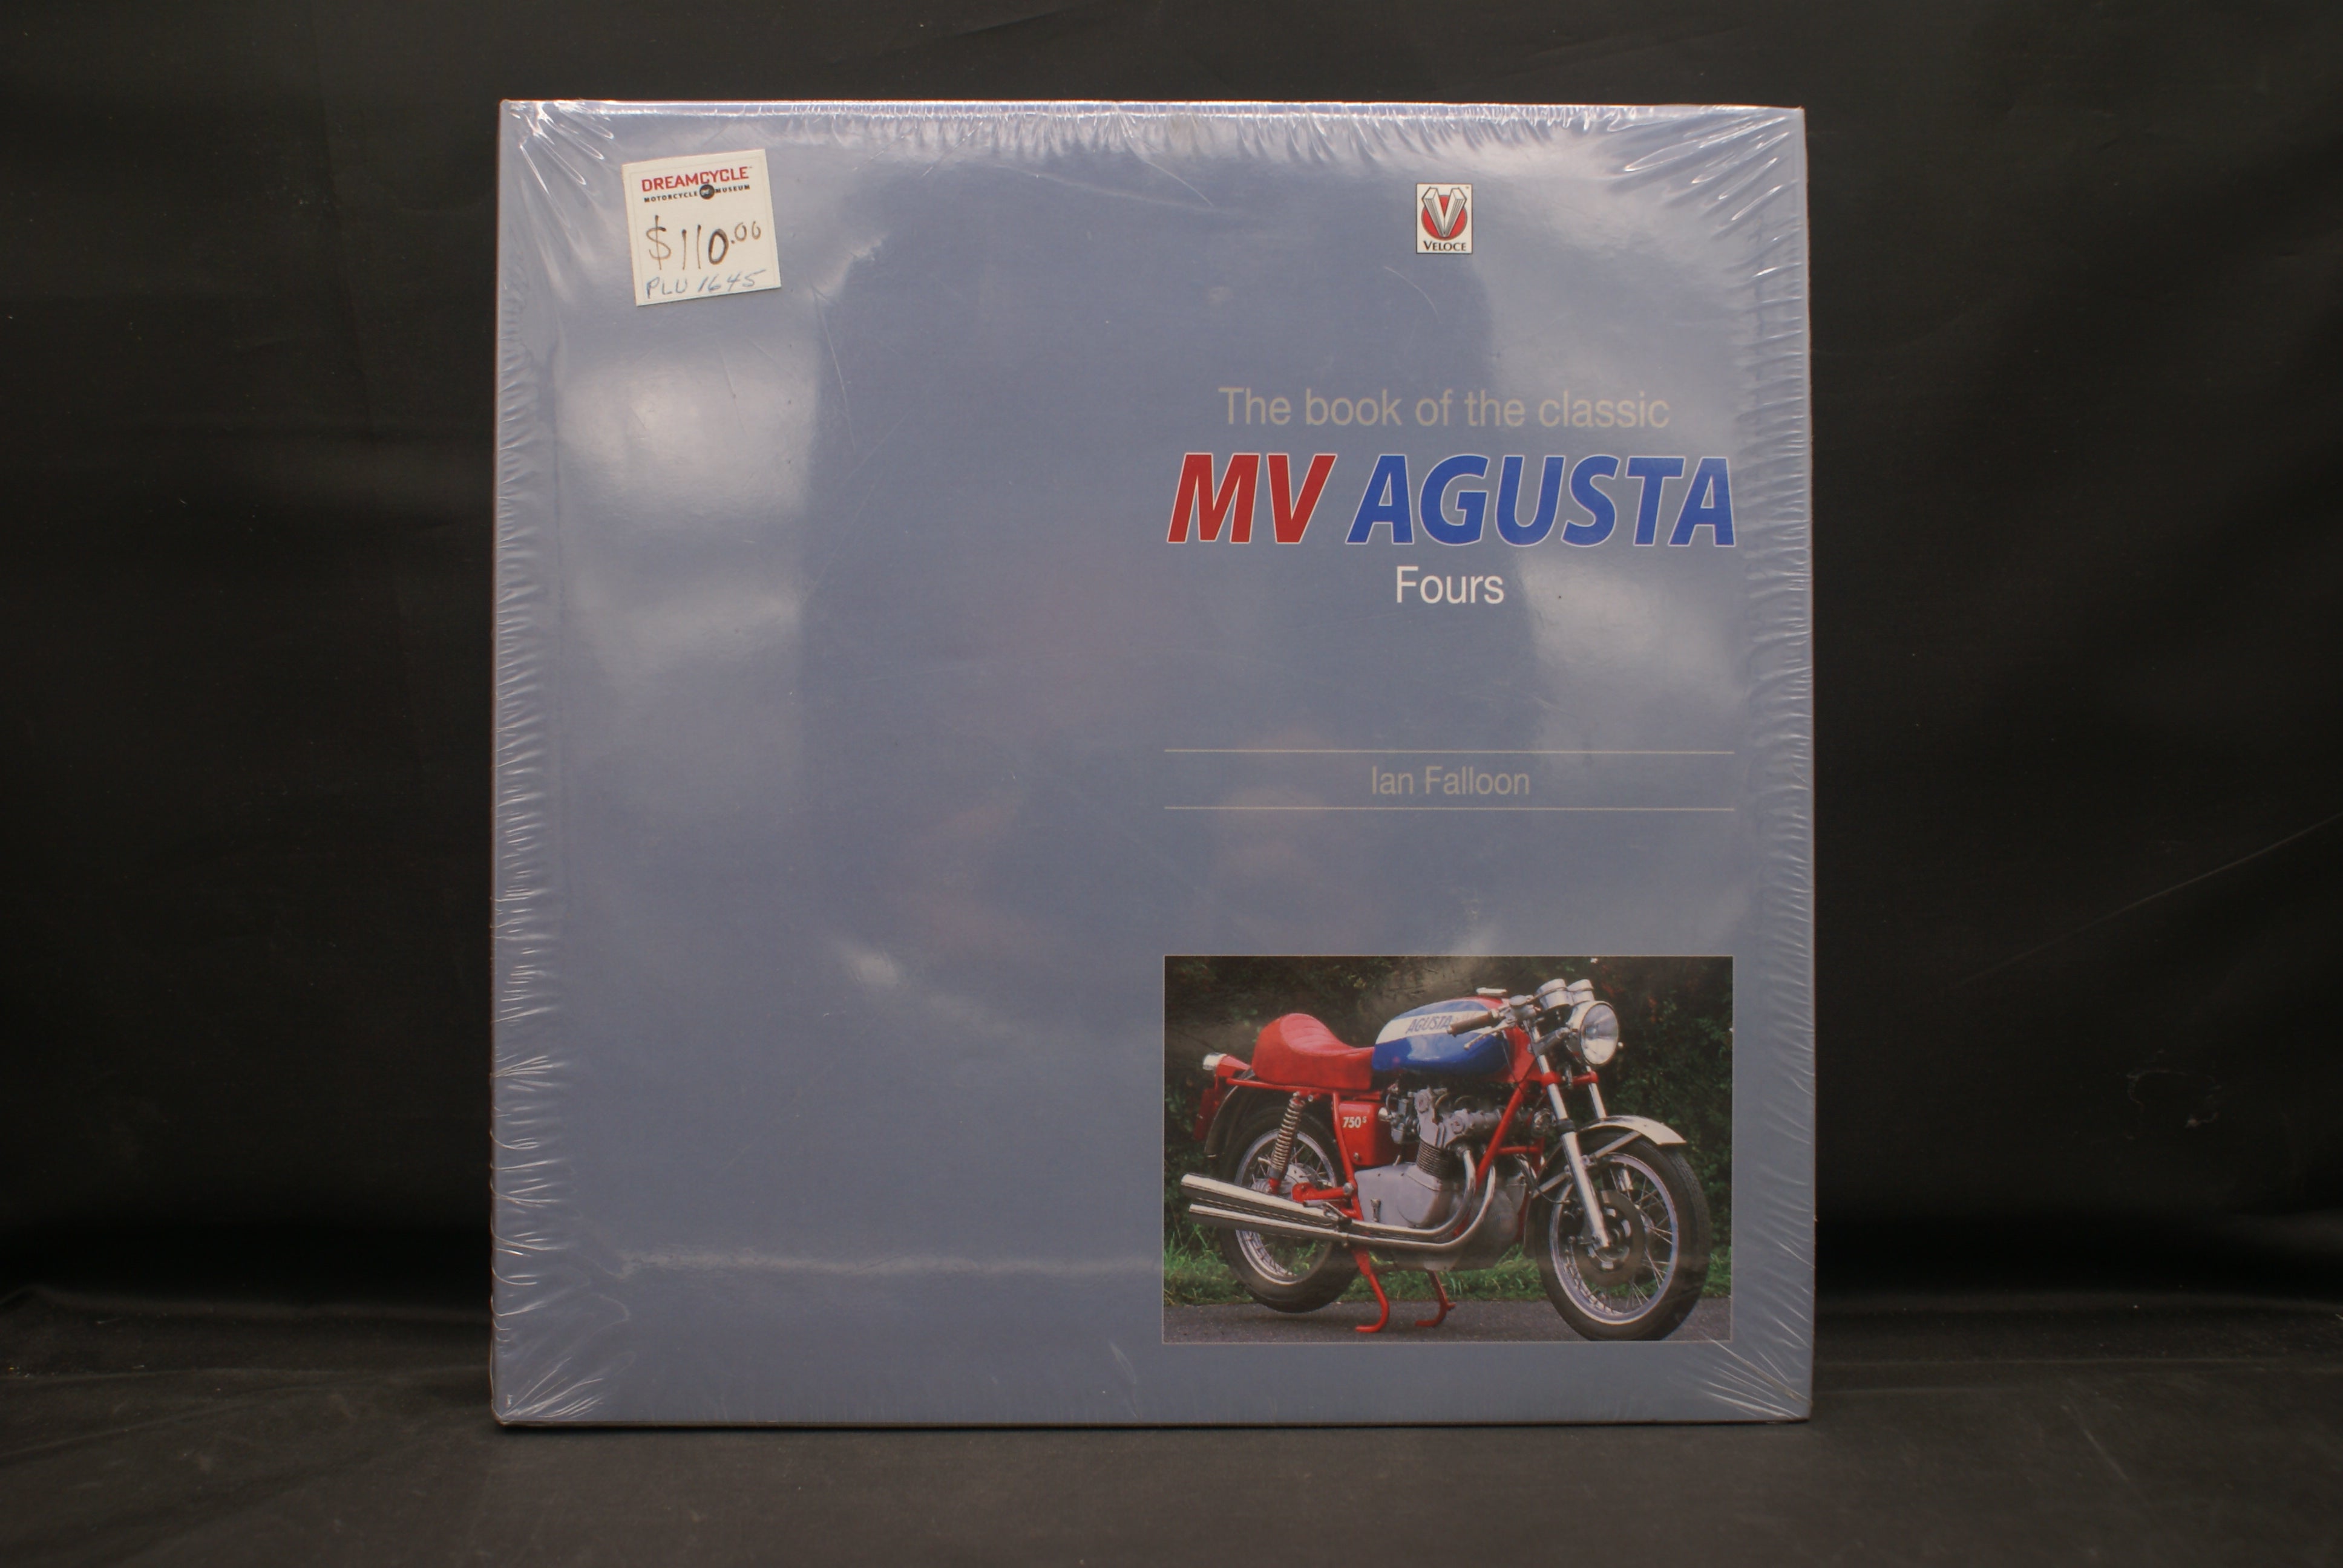 MV Agusta Fours